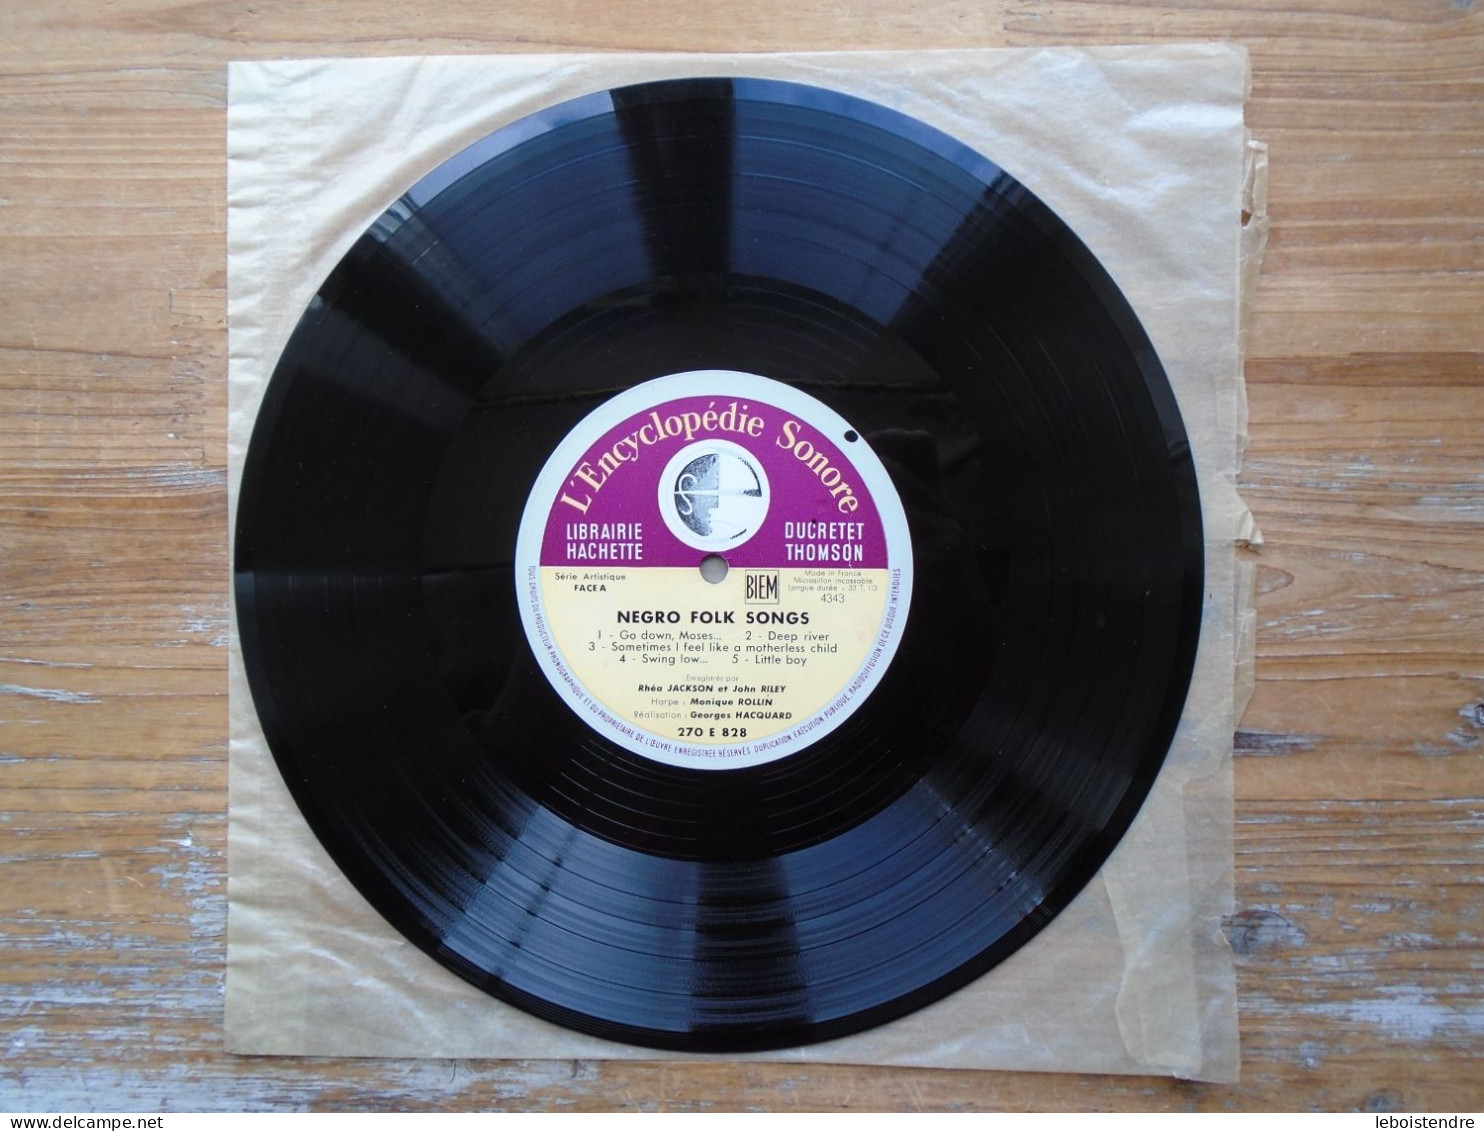 10" VINYLE NEGRO FOLK SONGS 270E828 + LIVRET L ENCYCLOPEDIE SONORE LIBRAIRIE HACHETTE RHEA JACKSON JOHN RILEY - Special Formats